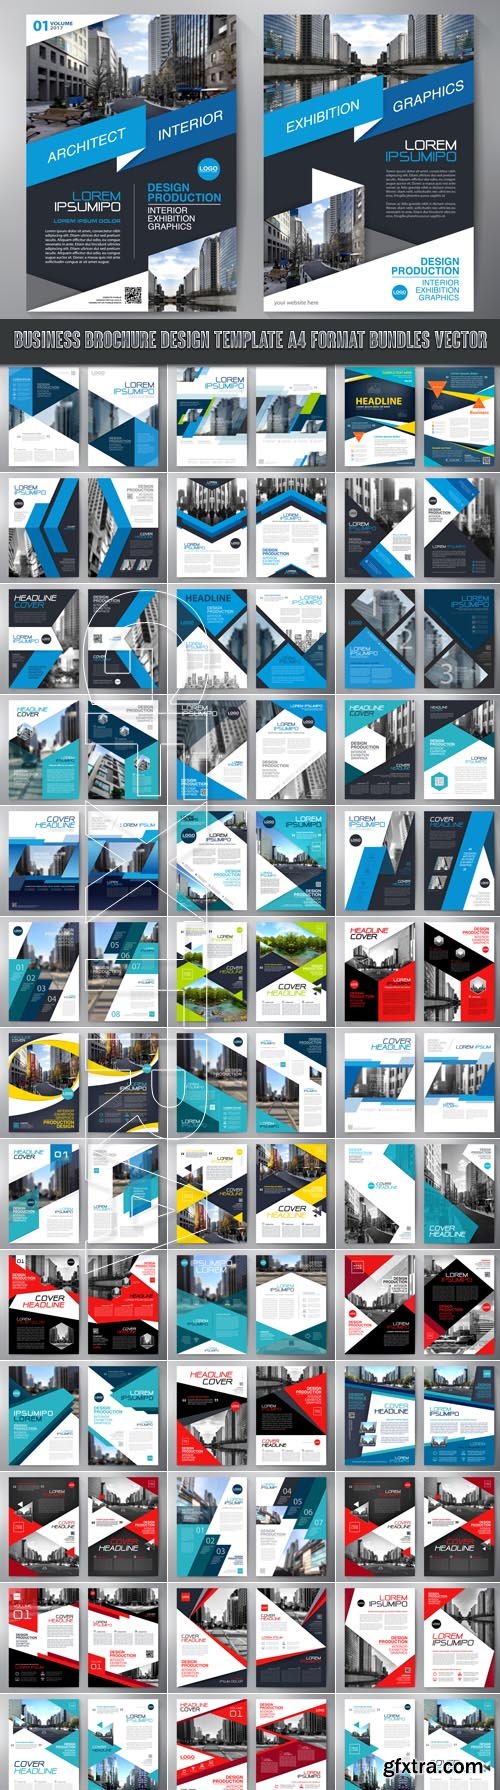 Business Brochure Design Template A4 format Bundles vector